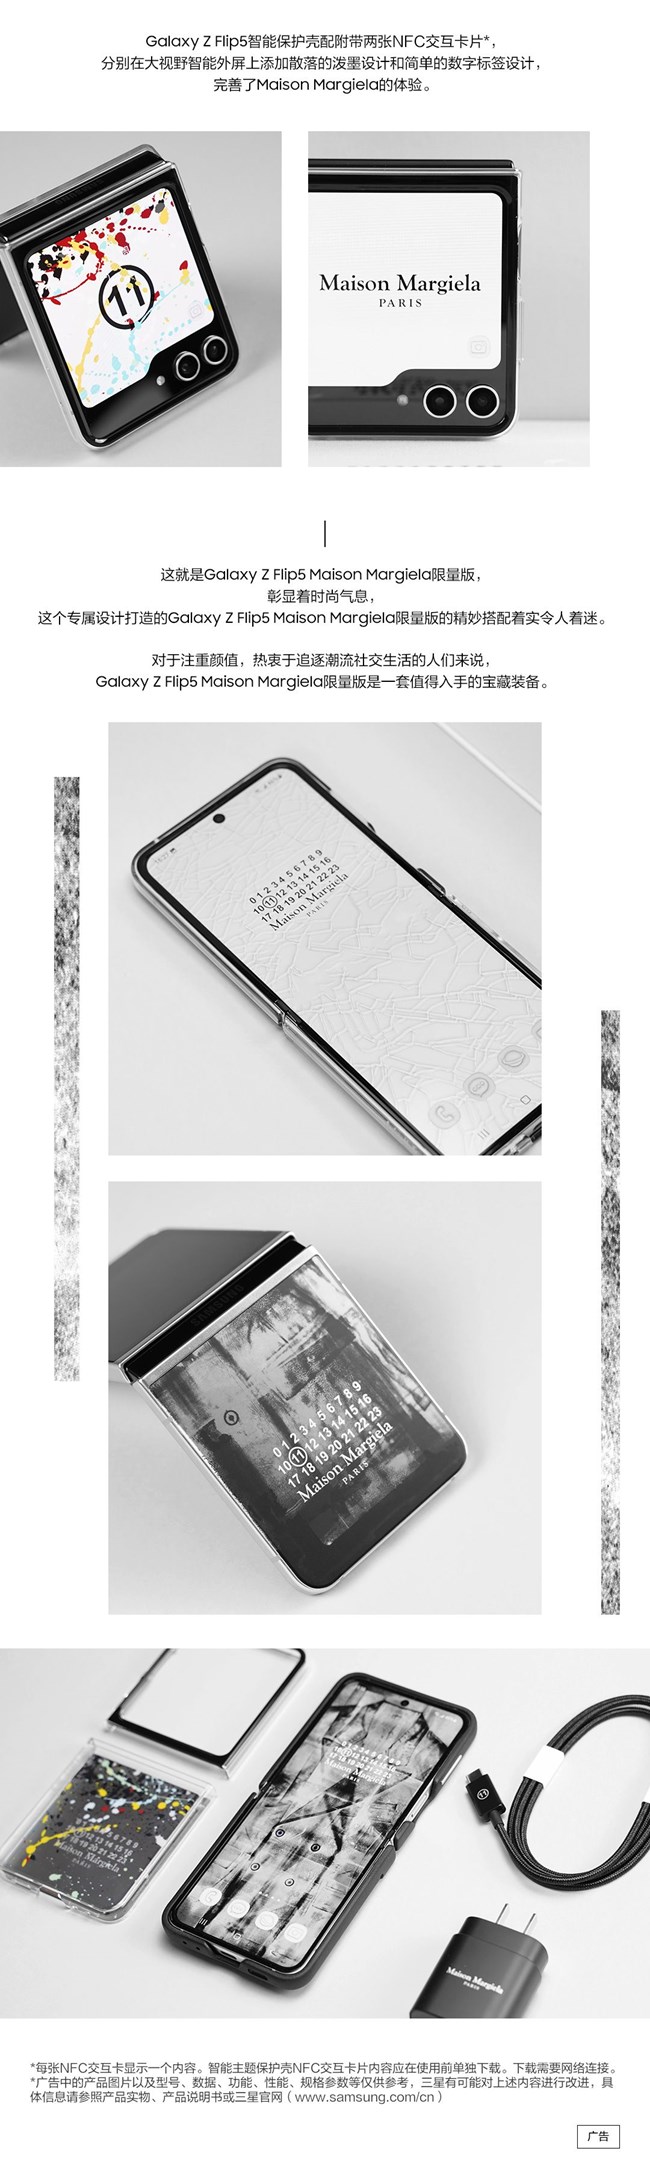 Galaxy Z Flip5 Maison Margiela限量版 精美图赏